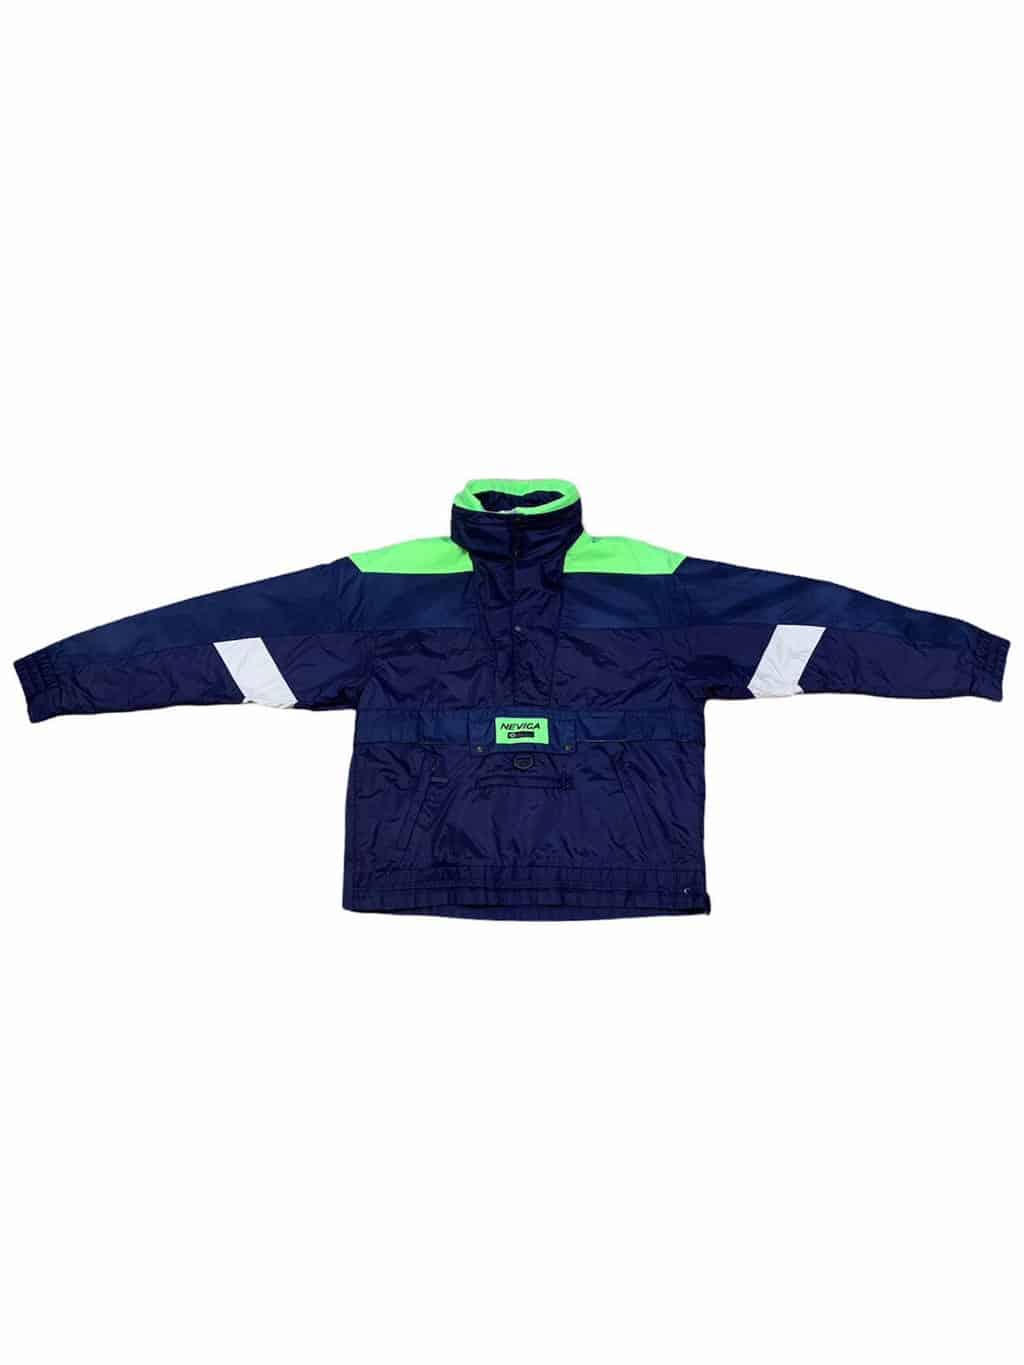 90s Vintage Nevica Ski Jacket Blue Green - L - St Cyr Vintage